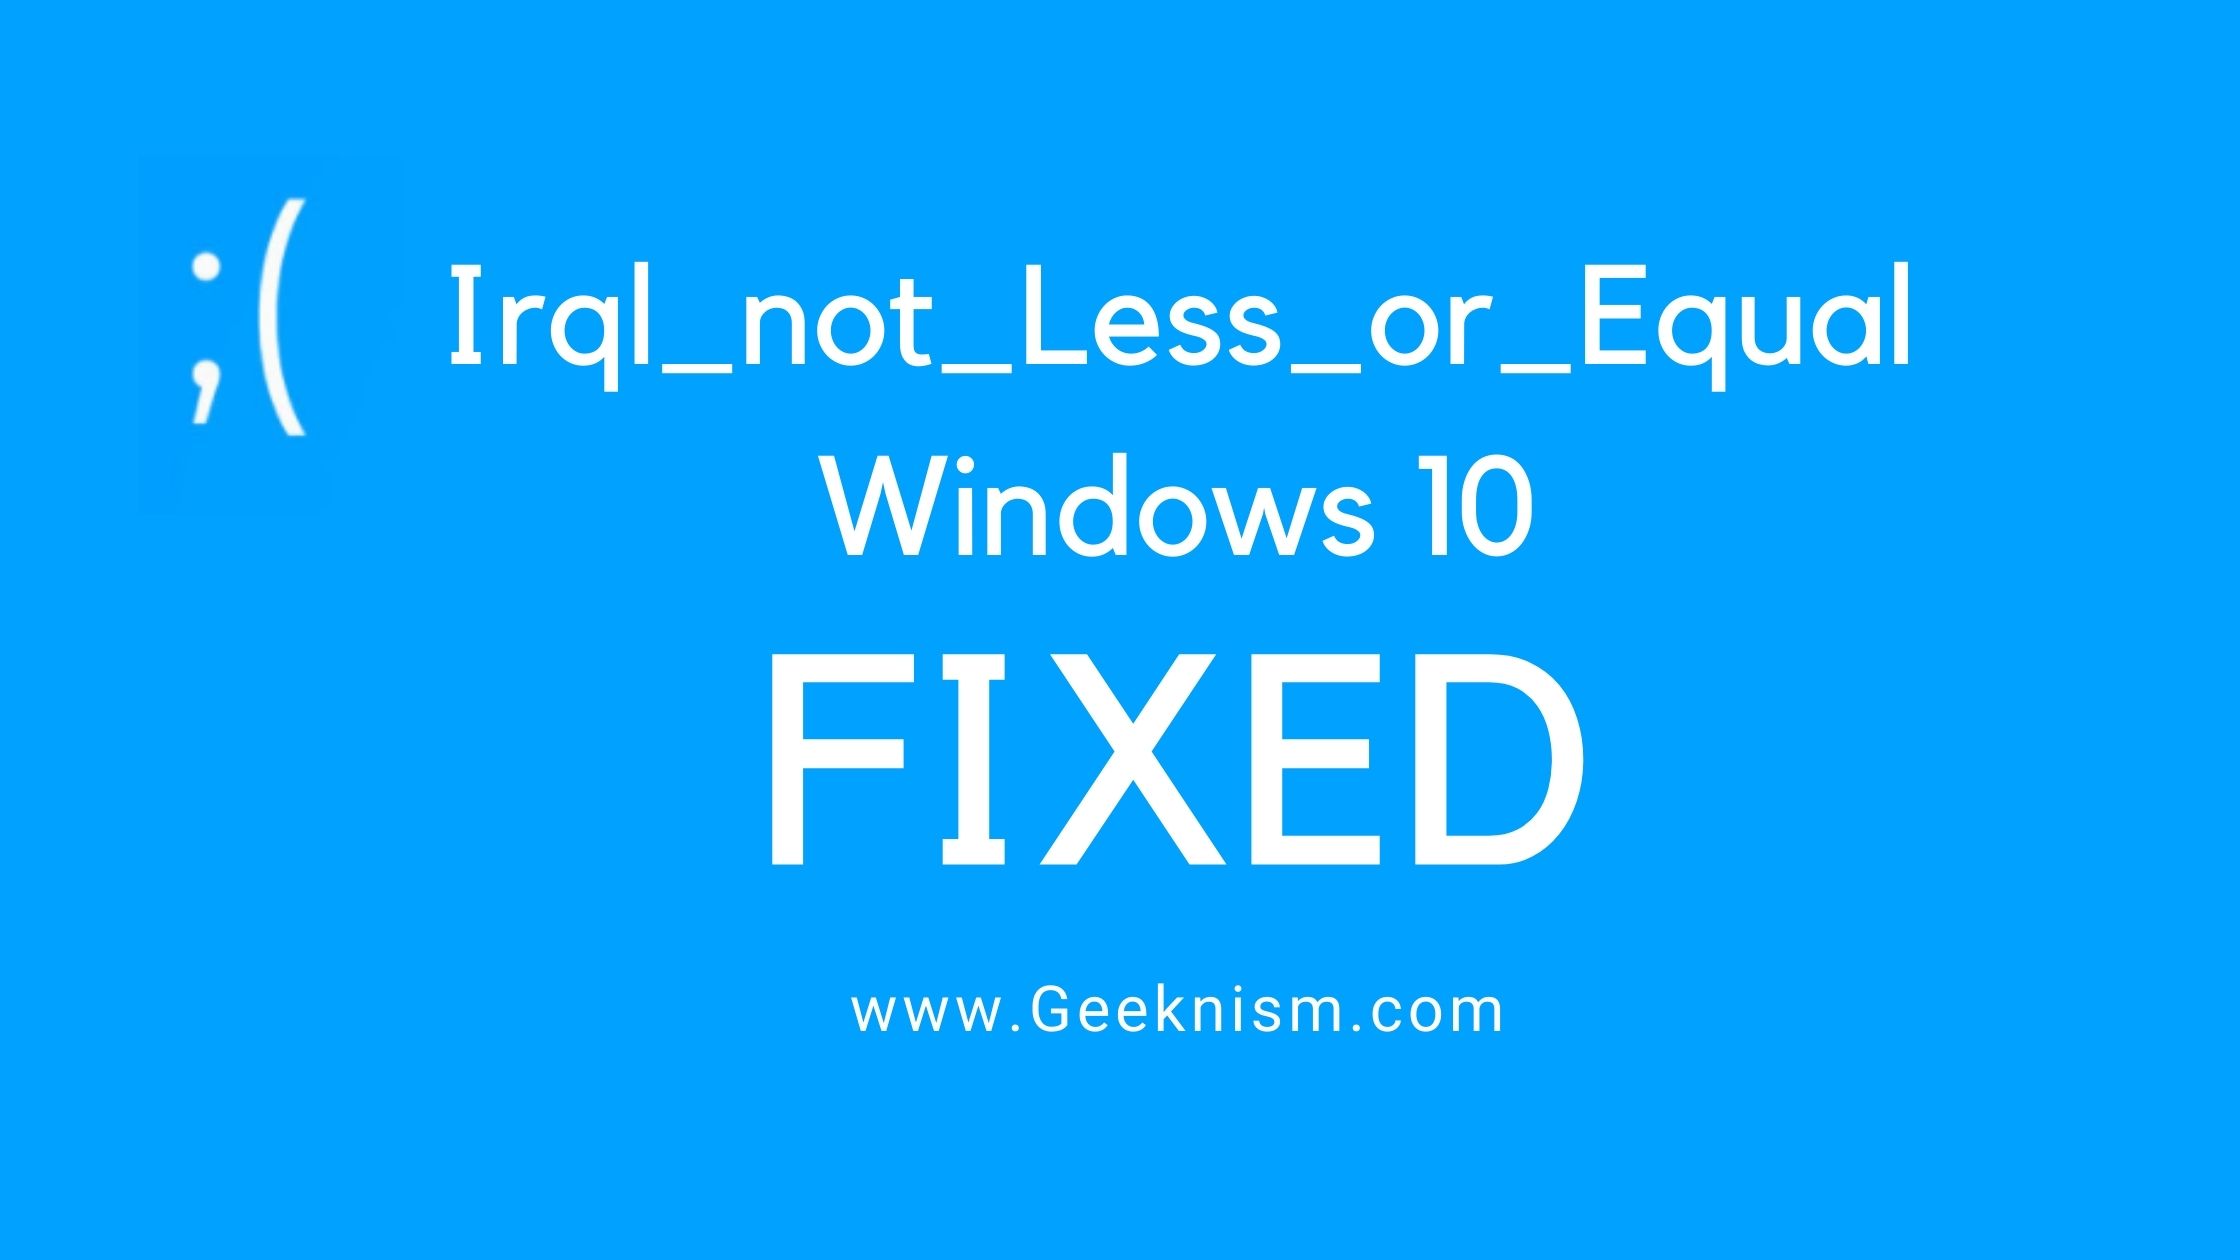 Irql not less or equal windows